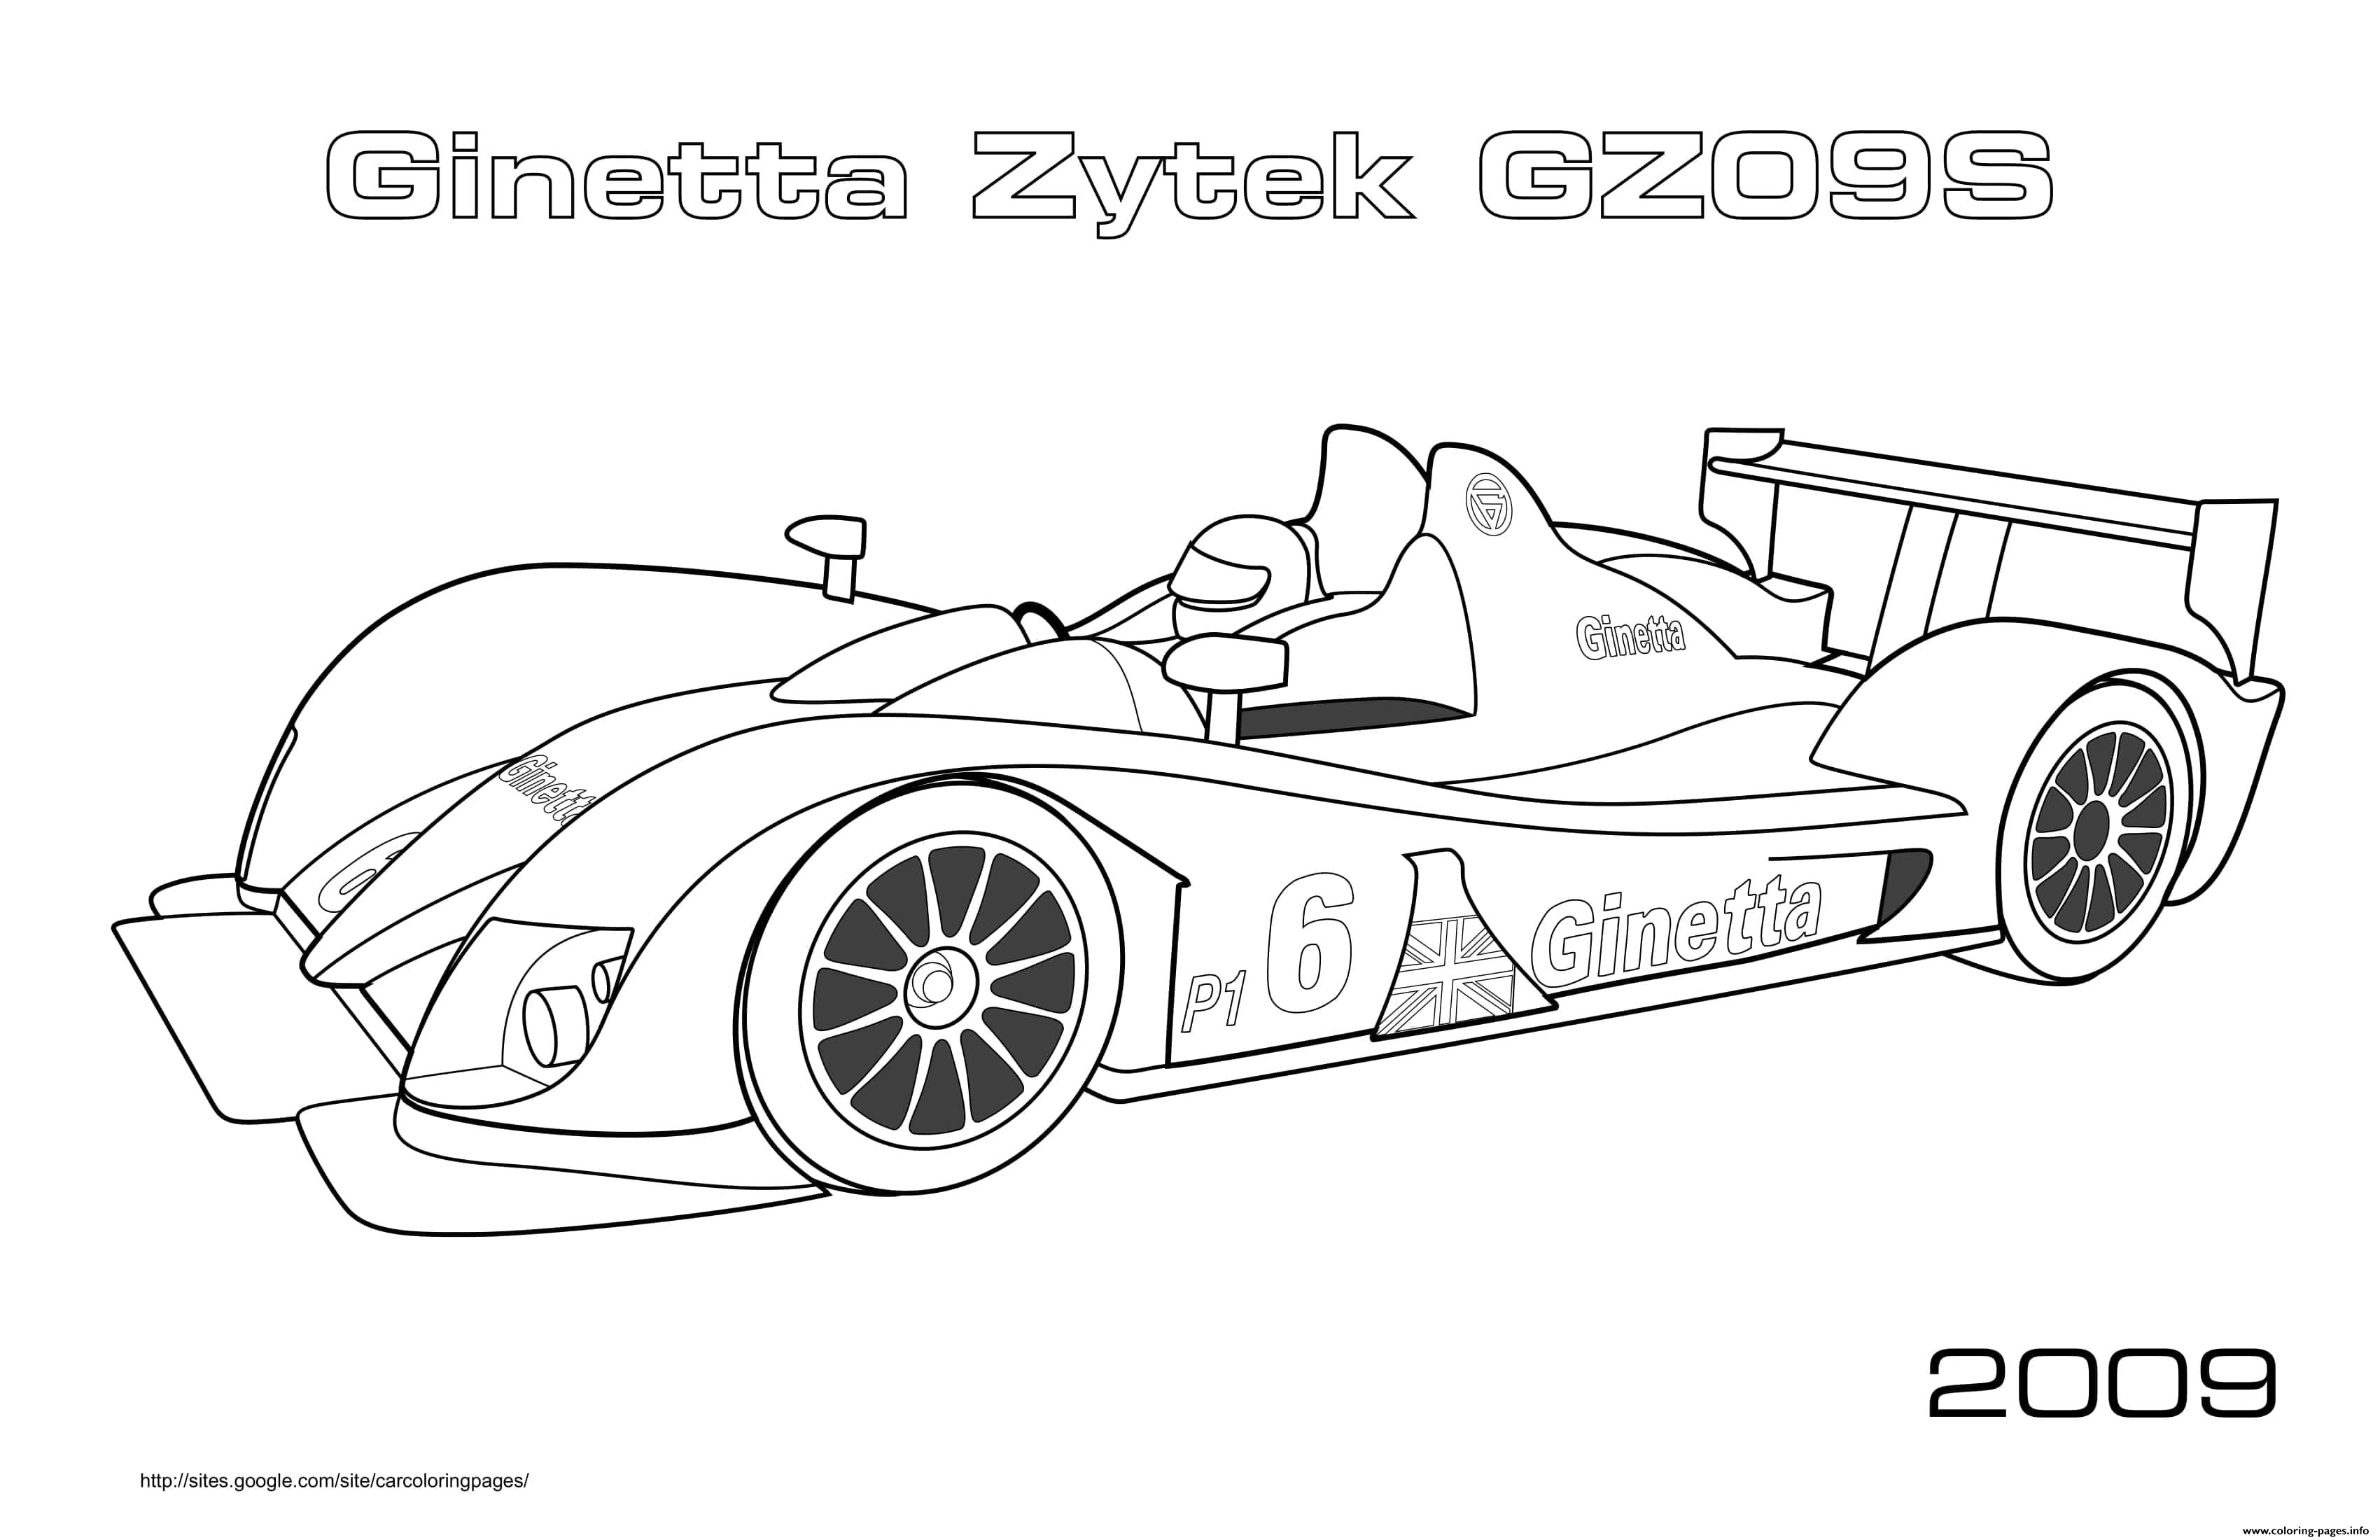 F1 Ginetta Zytek Gz09s 2009 coloring